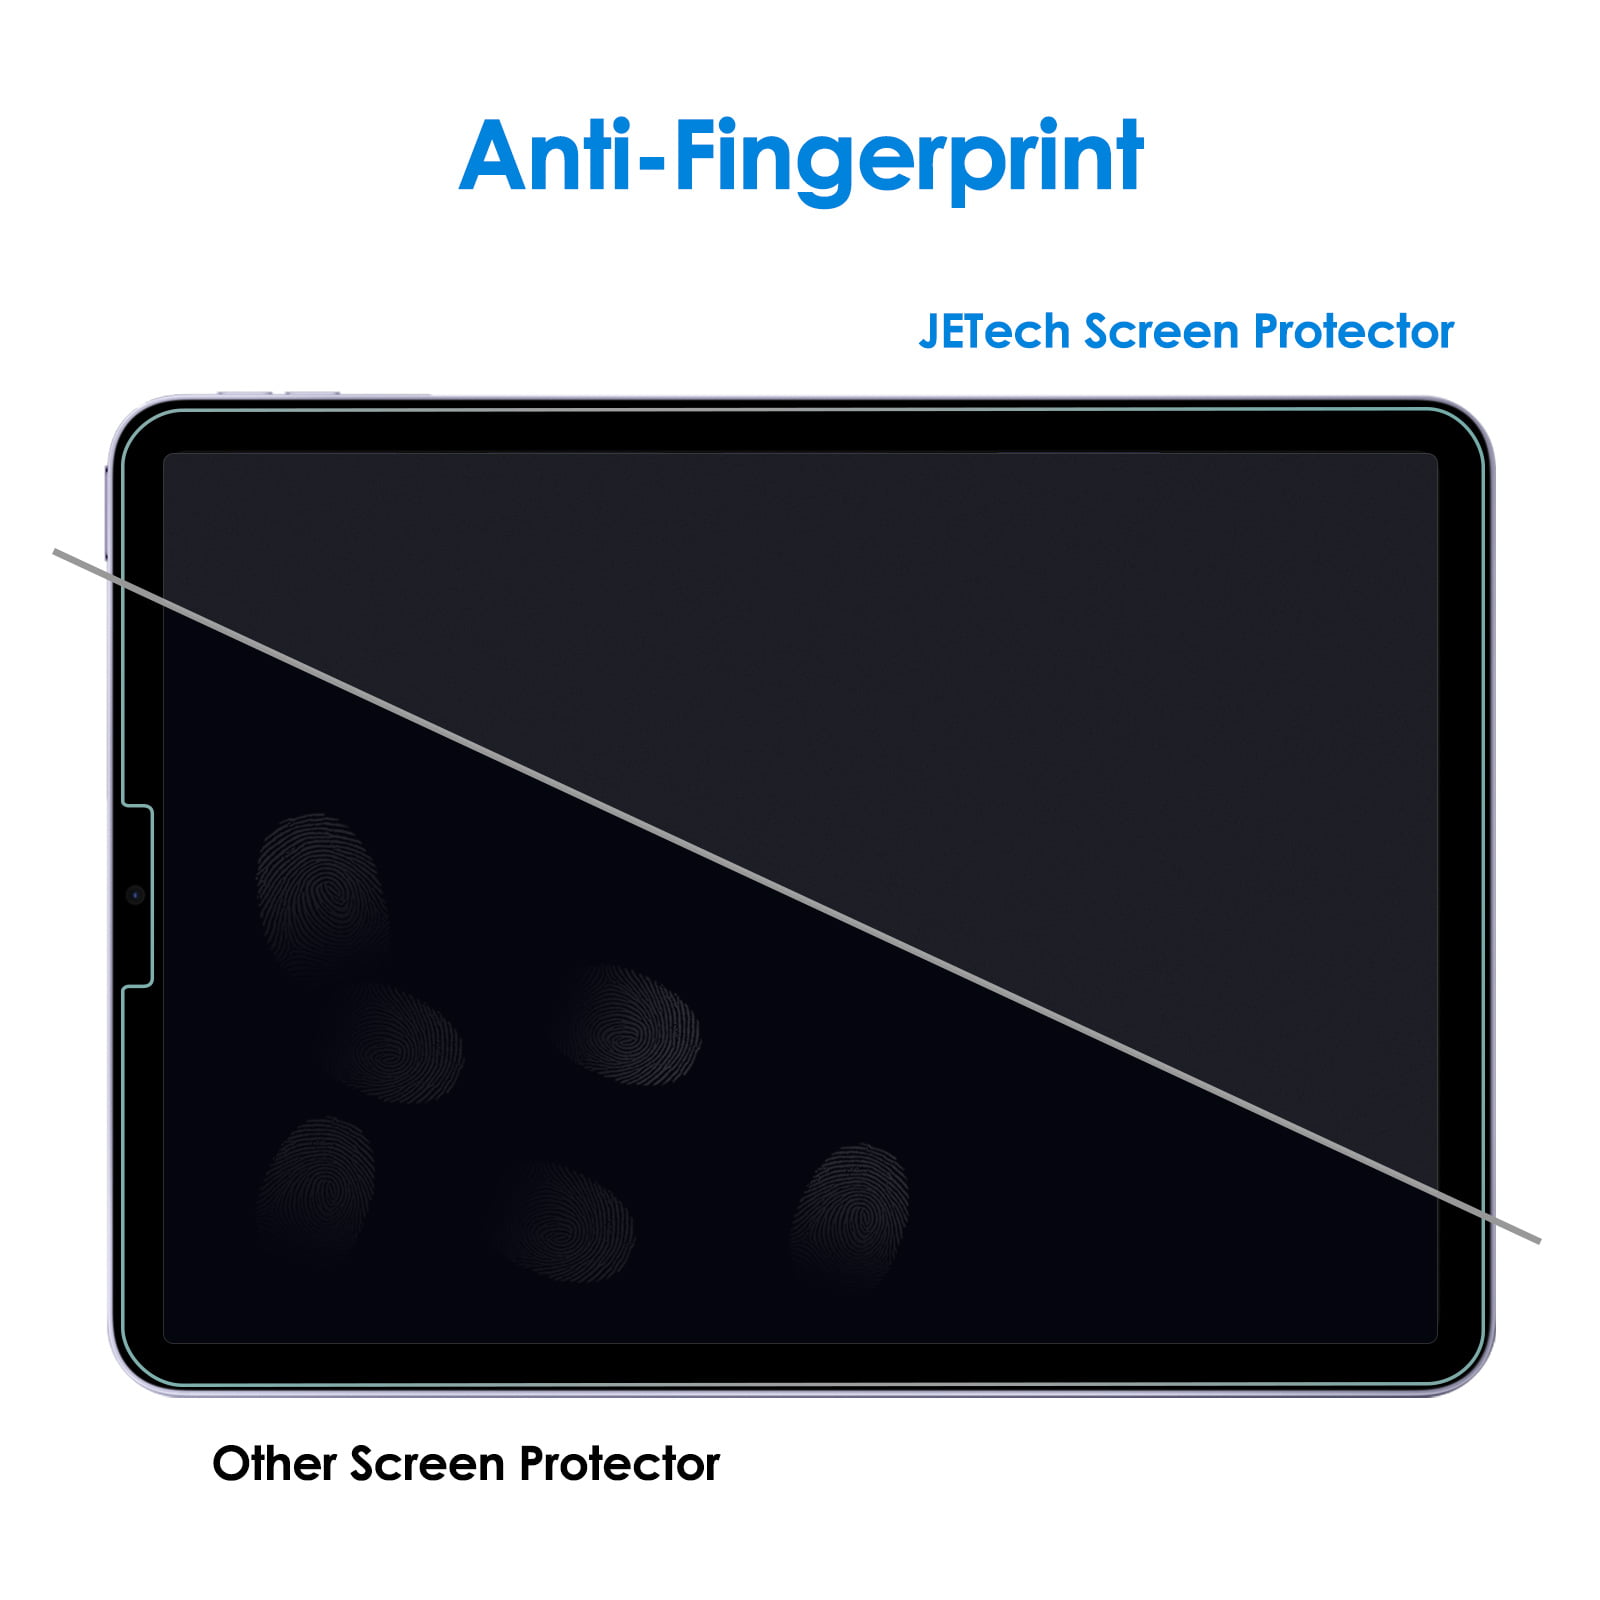 ClearCal Screen Protector Film for iPad Air & iPad 5